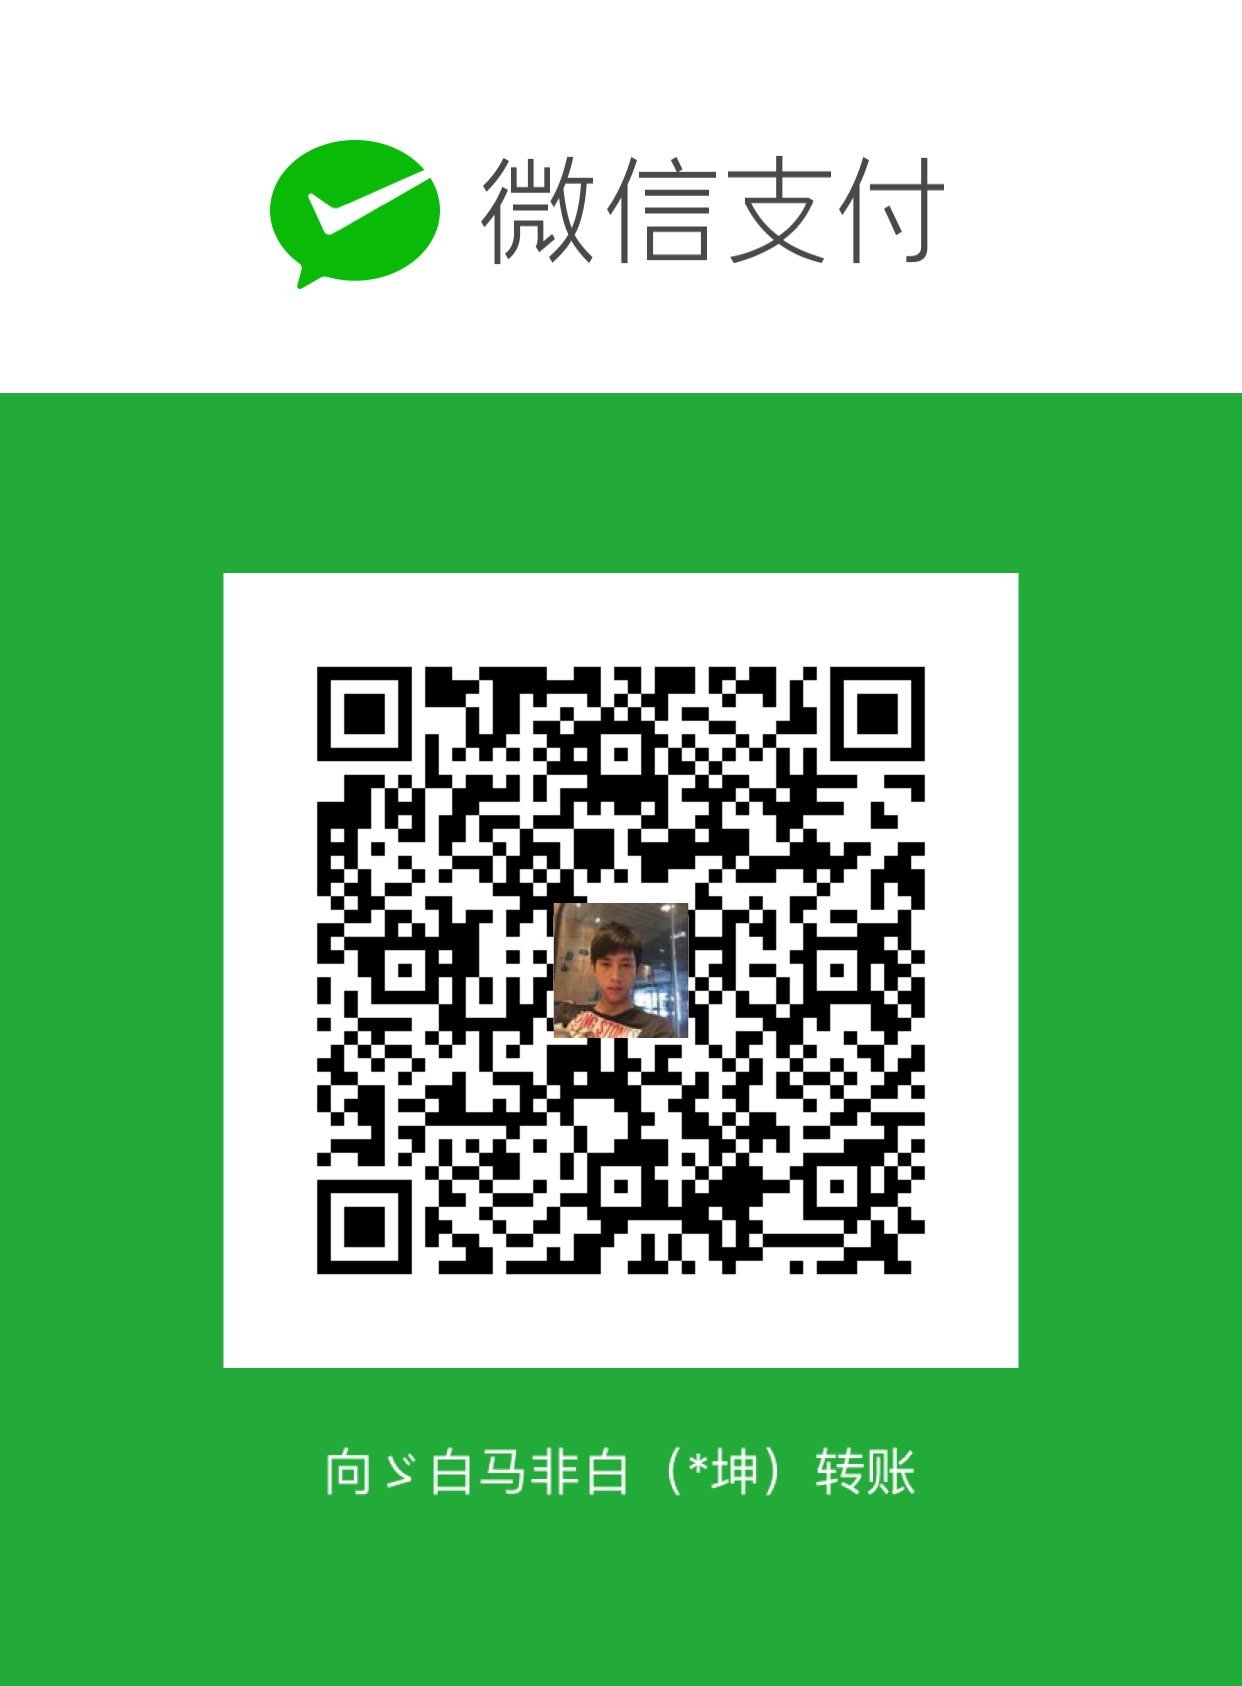 墨含 WeChat Pay